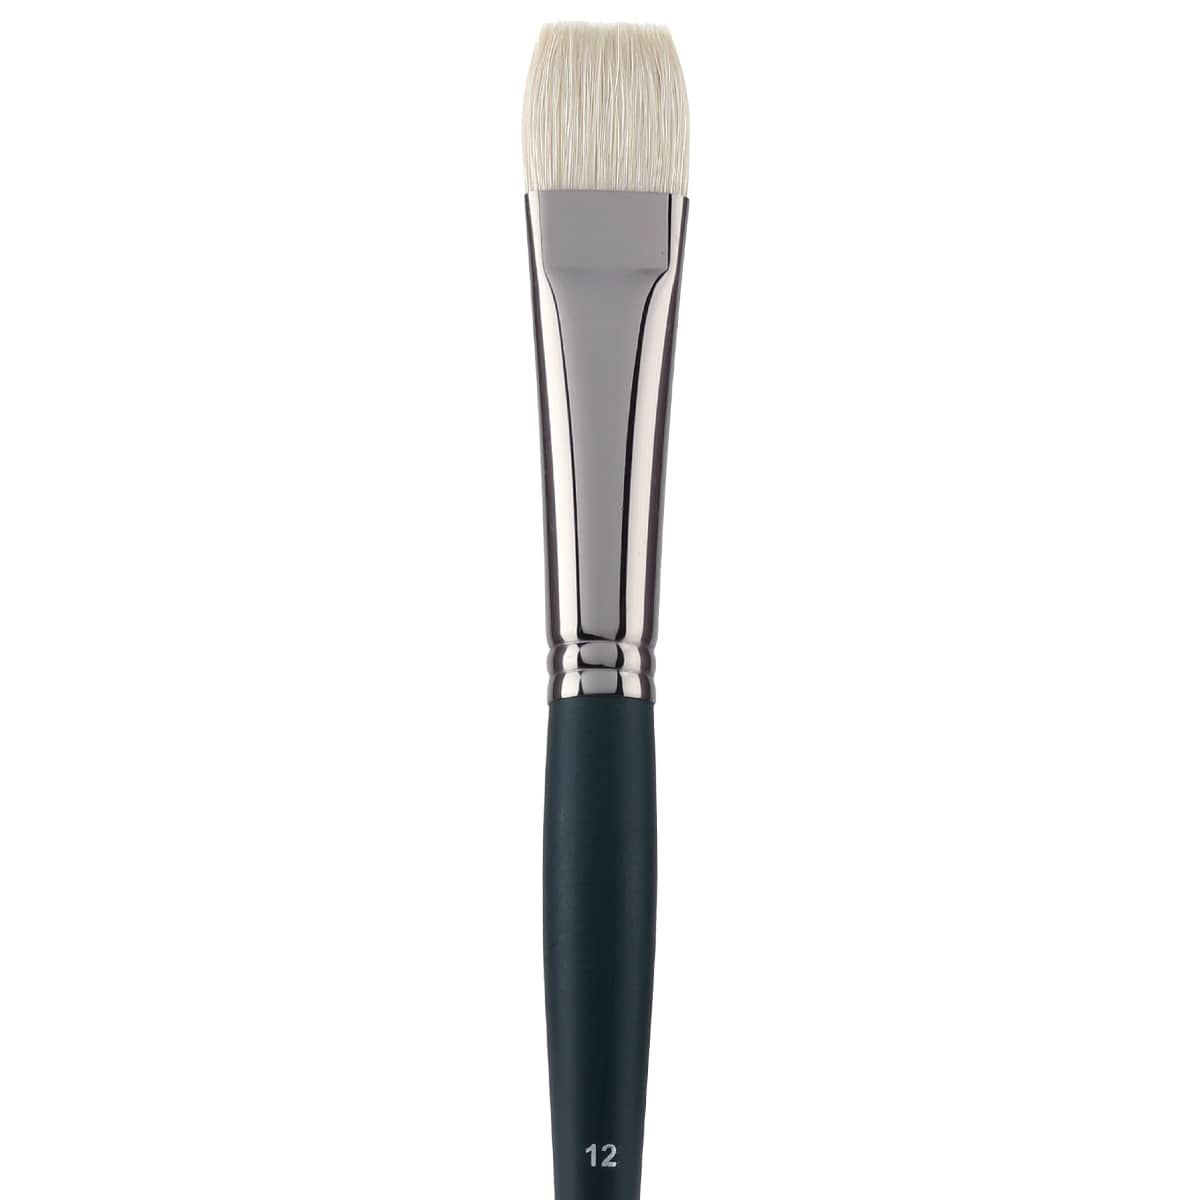 Imperial Professional Chungking Hog Bristle Brush, Bright Size #12